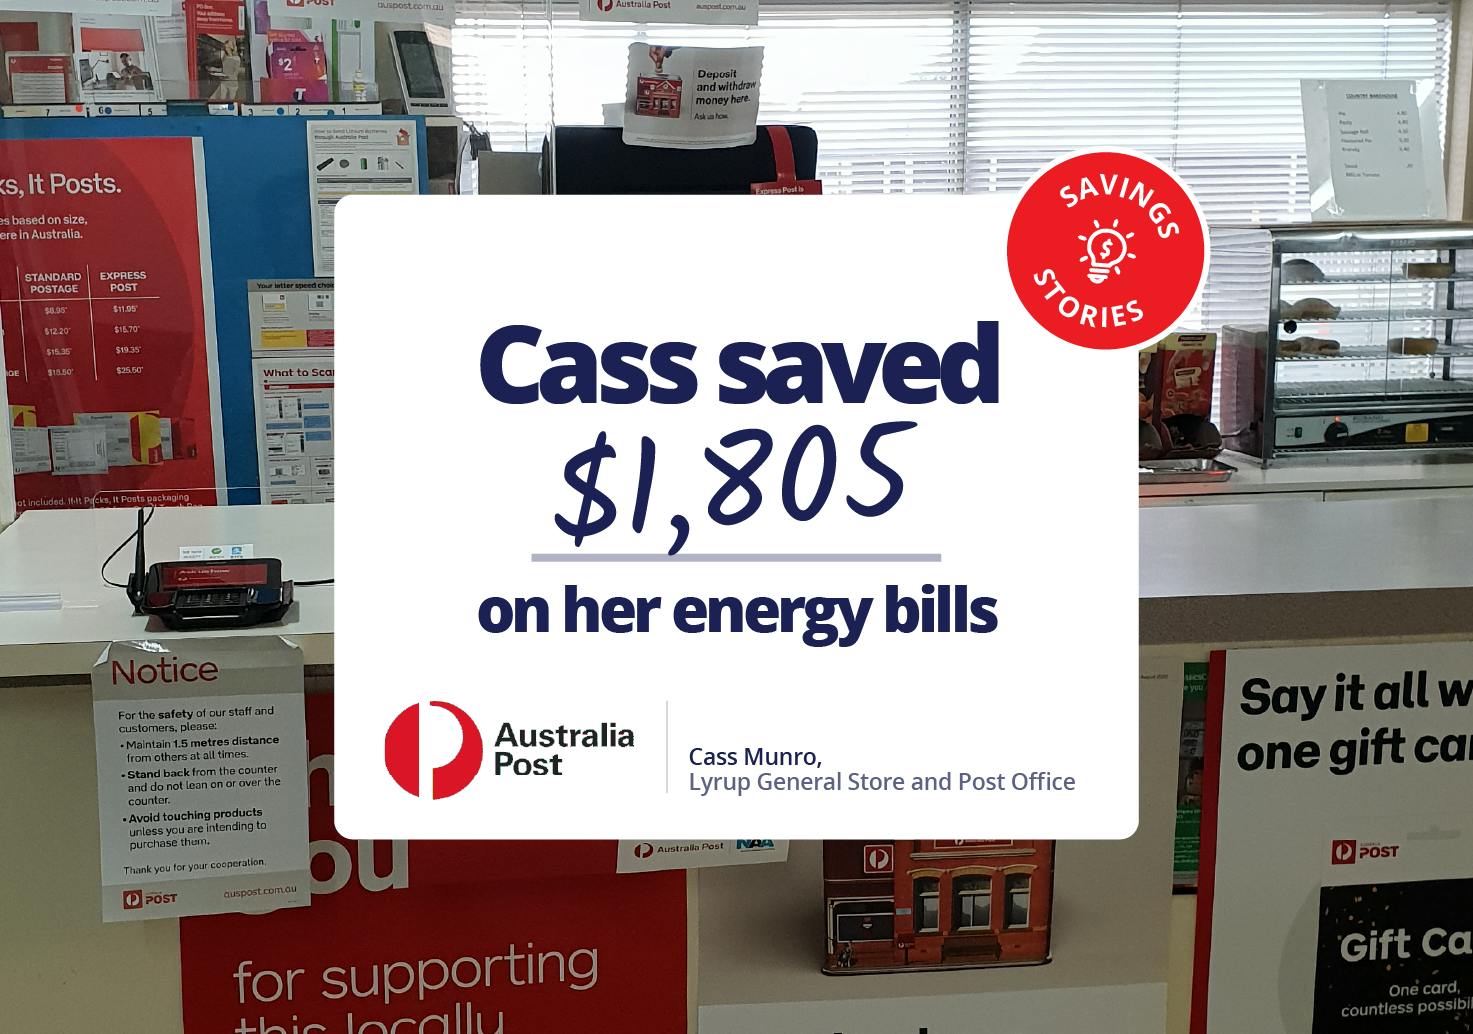 Cess saved $1,805 on her energy bills